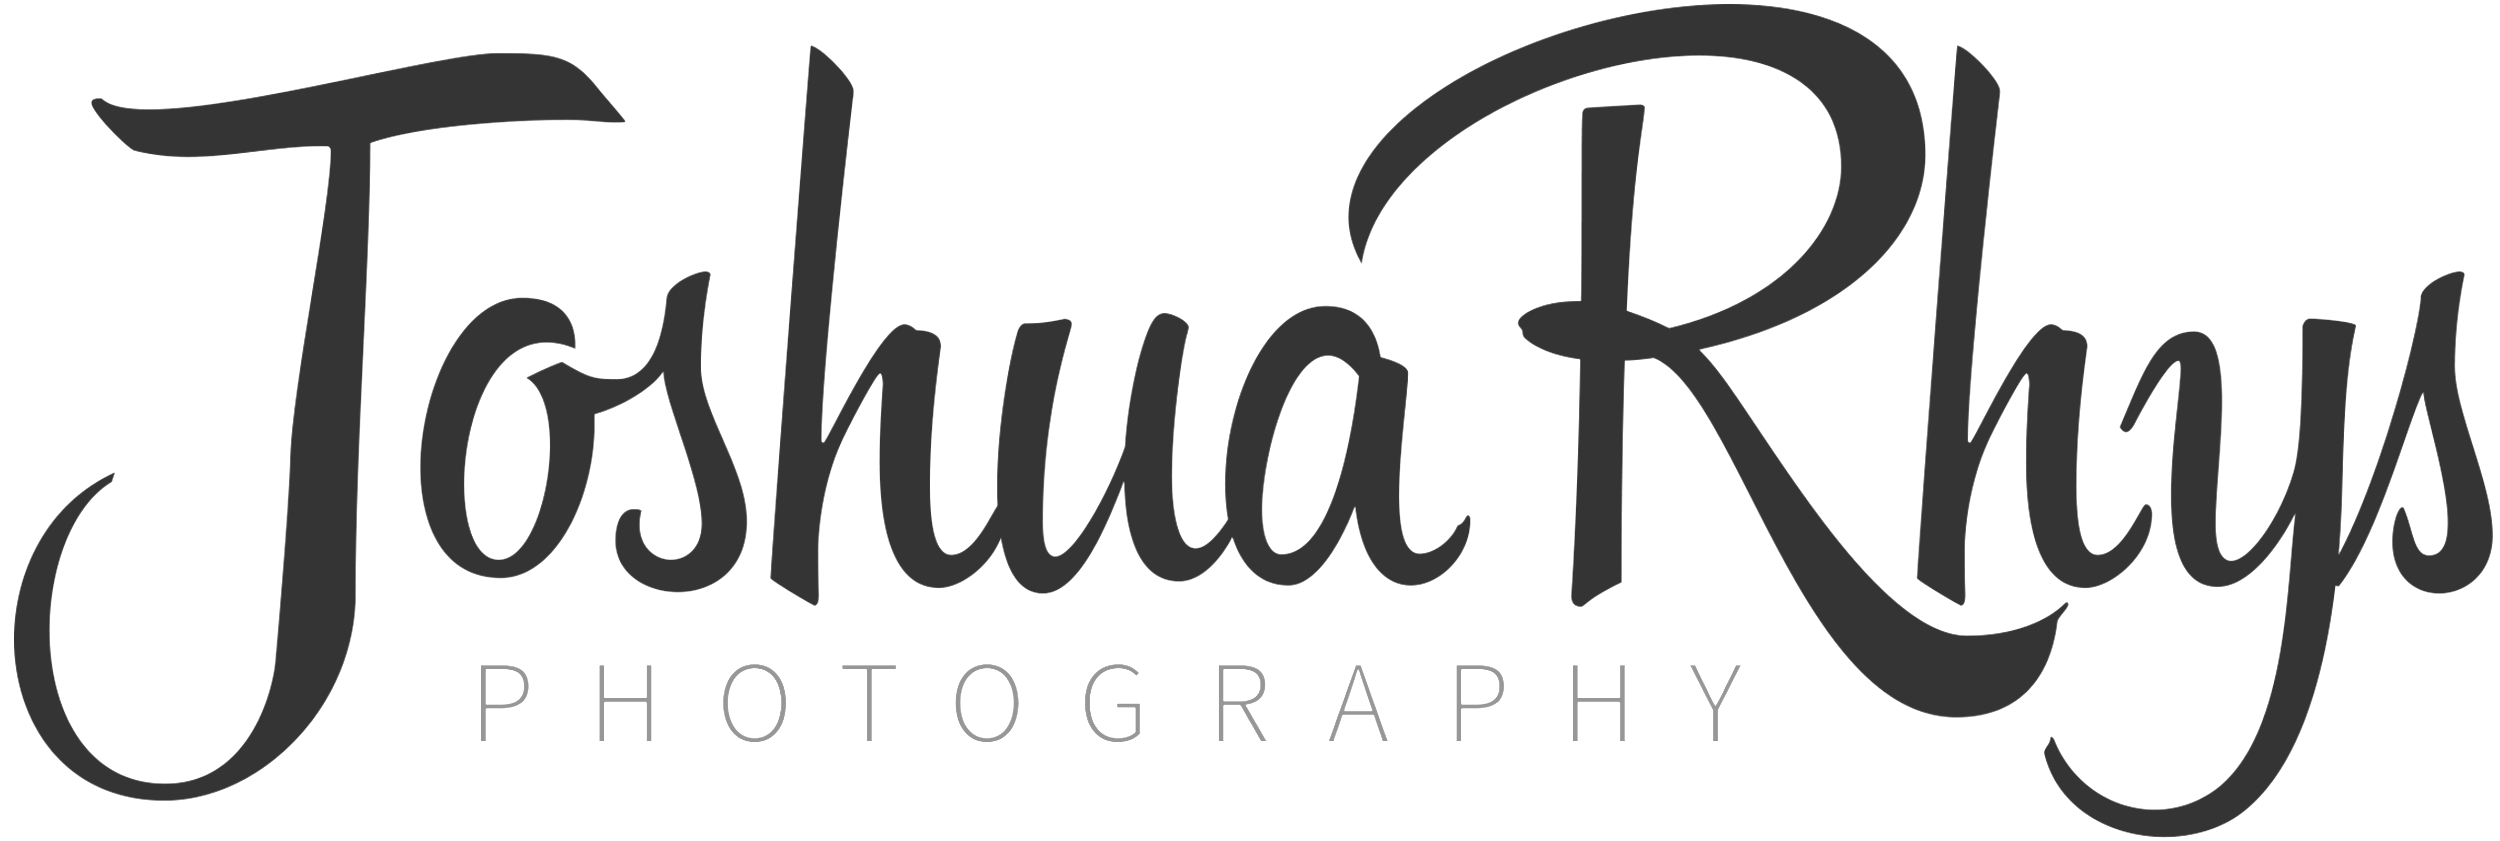 Rahul Rana Photography Logo - Guitar String PNG Image | Transparent PNG  Free Download on SeekPNG